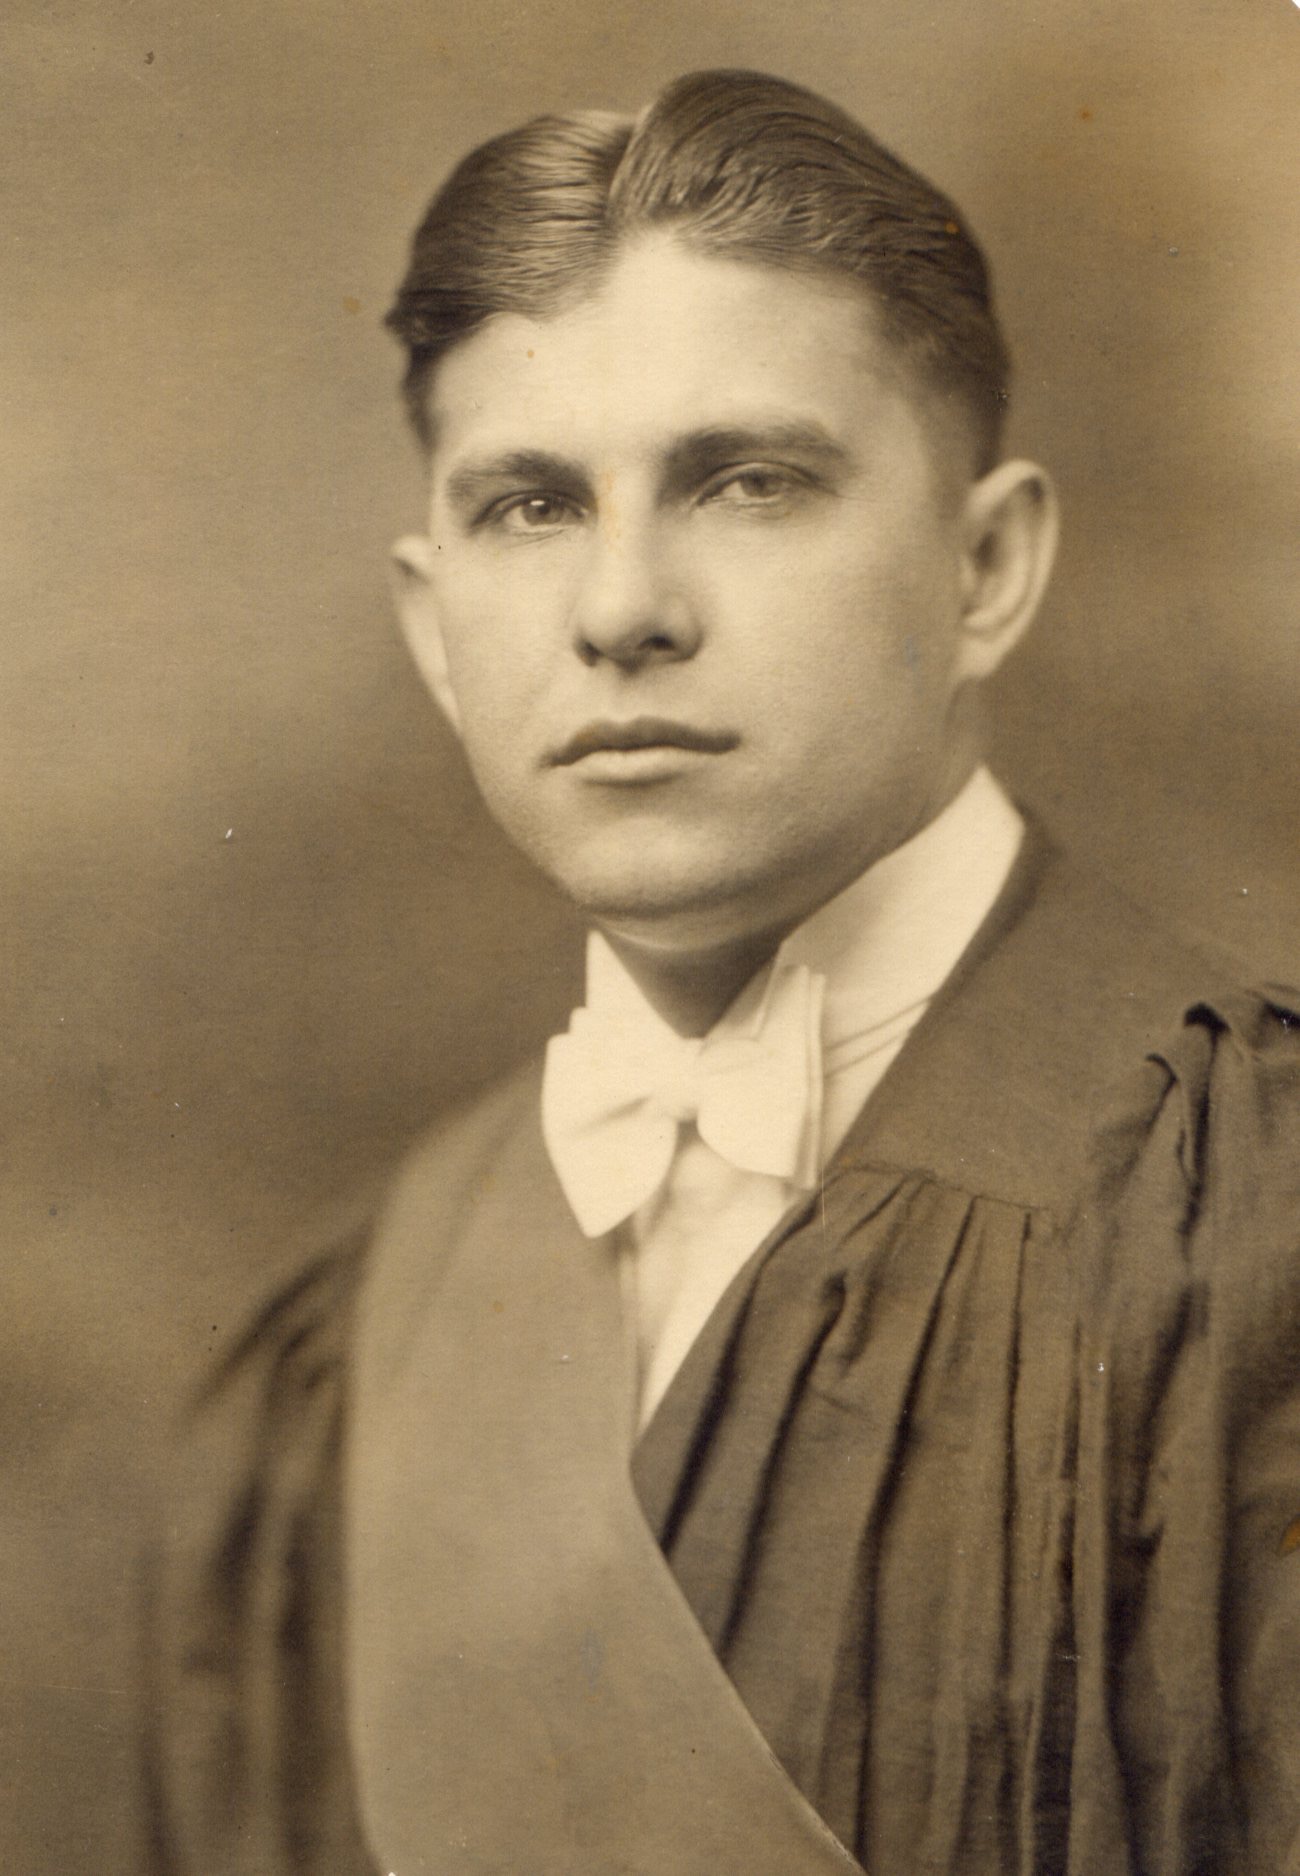 Victor, 1929 graduation from medical school